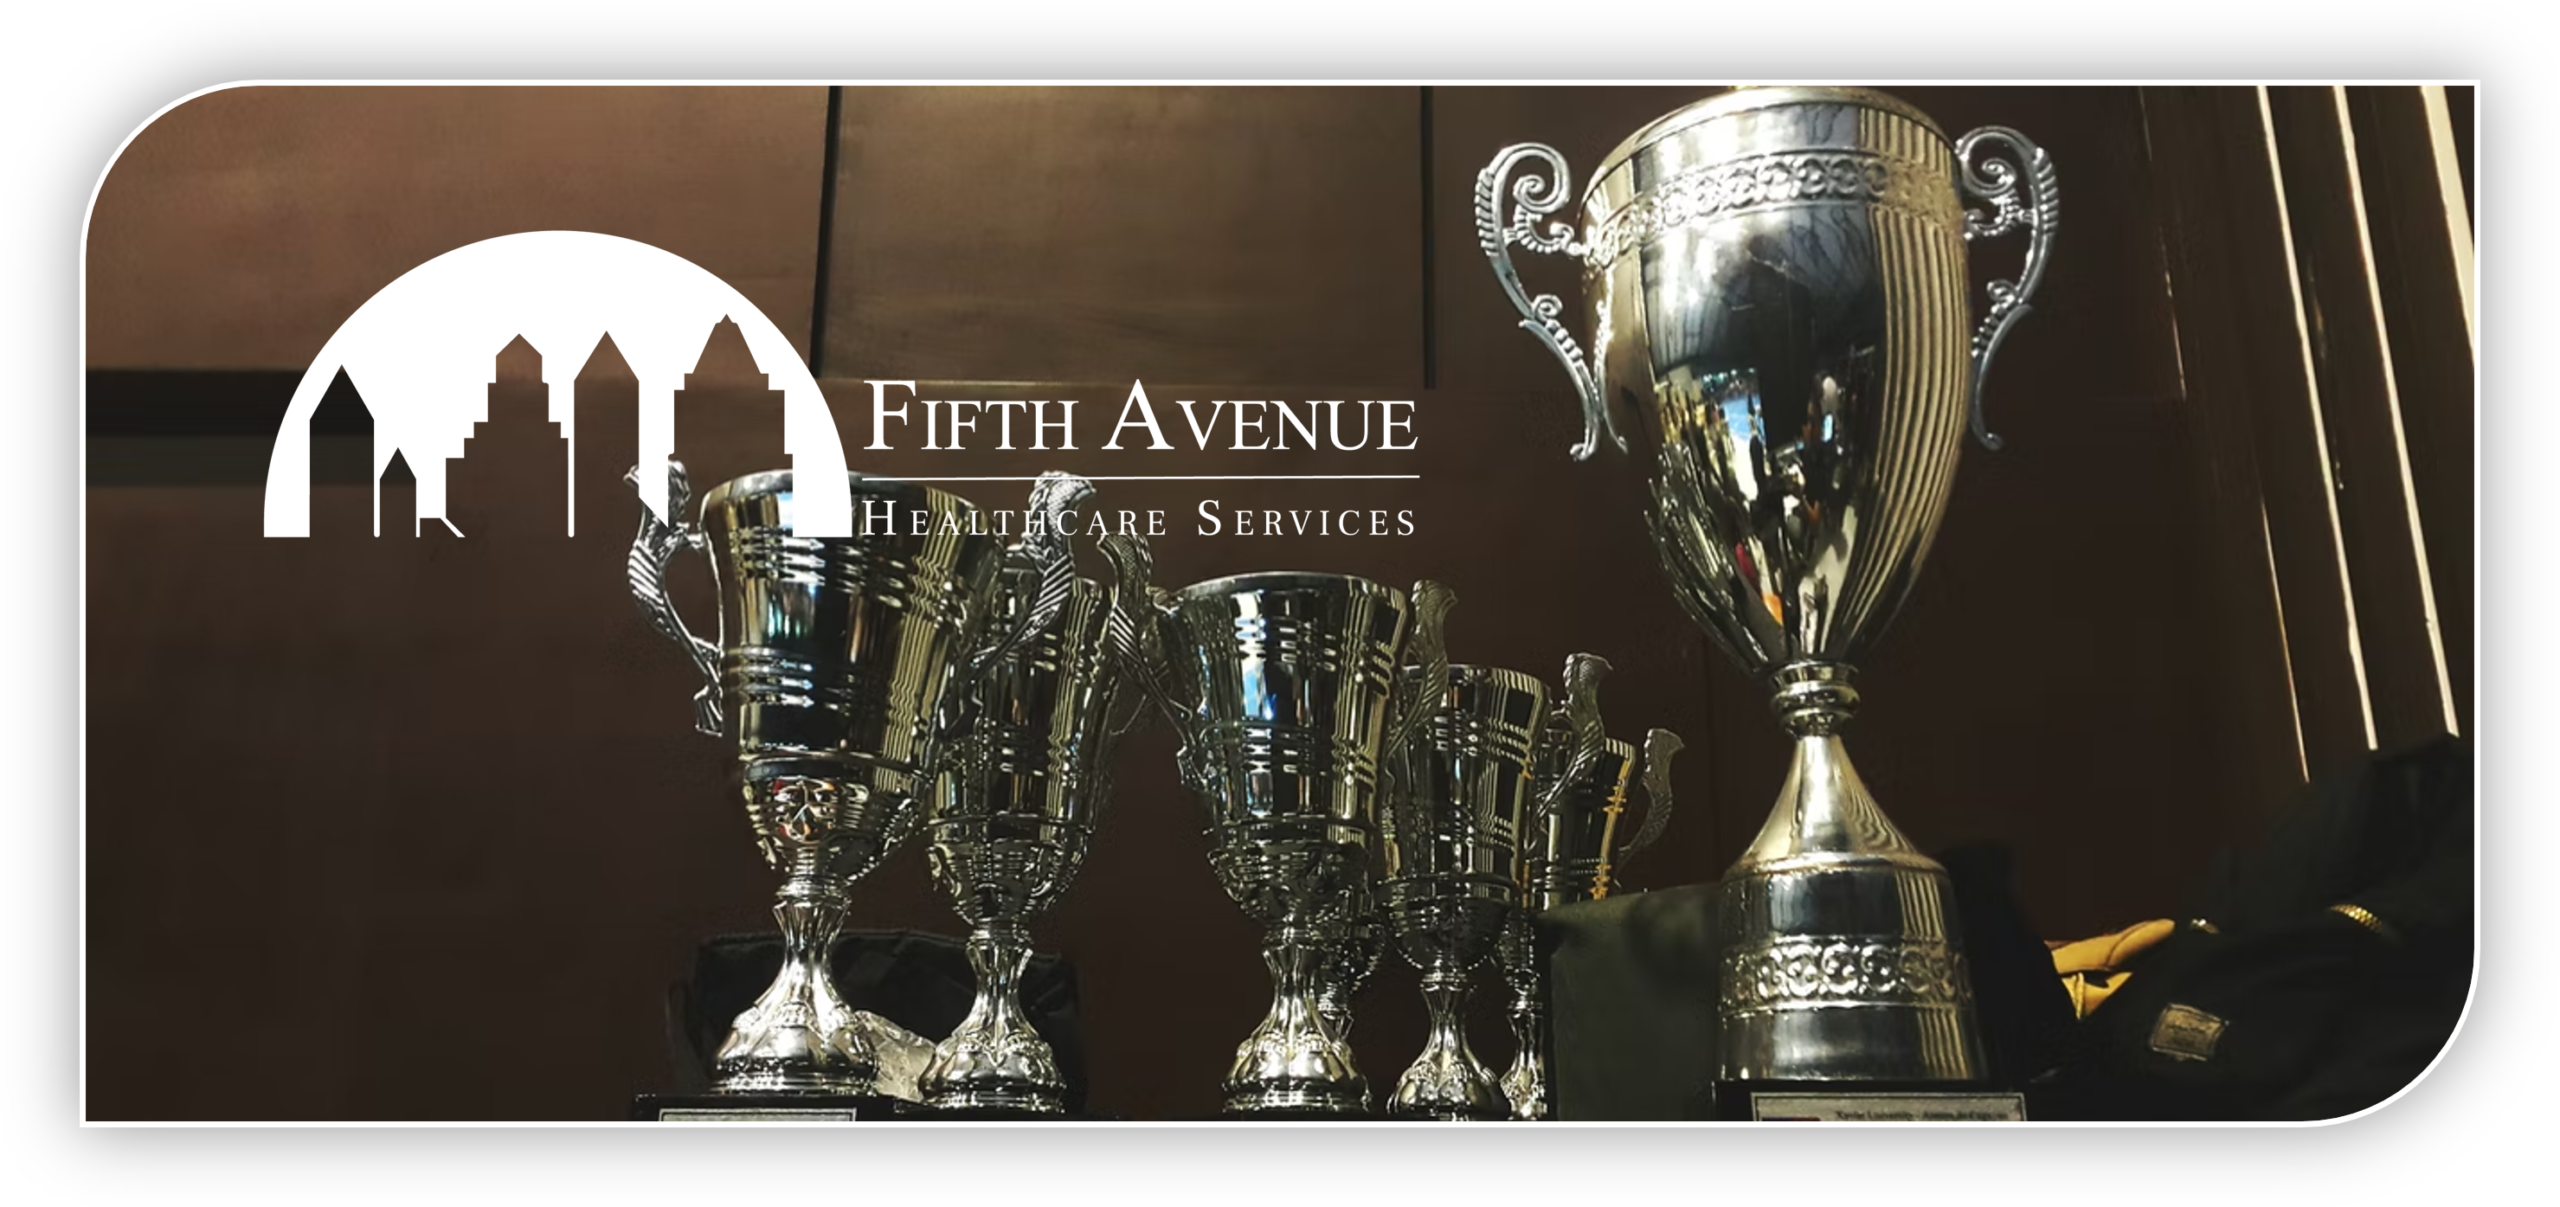 Fifth Avenue Healthcare Services Healthcare AdAward Winner